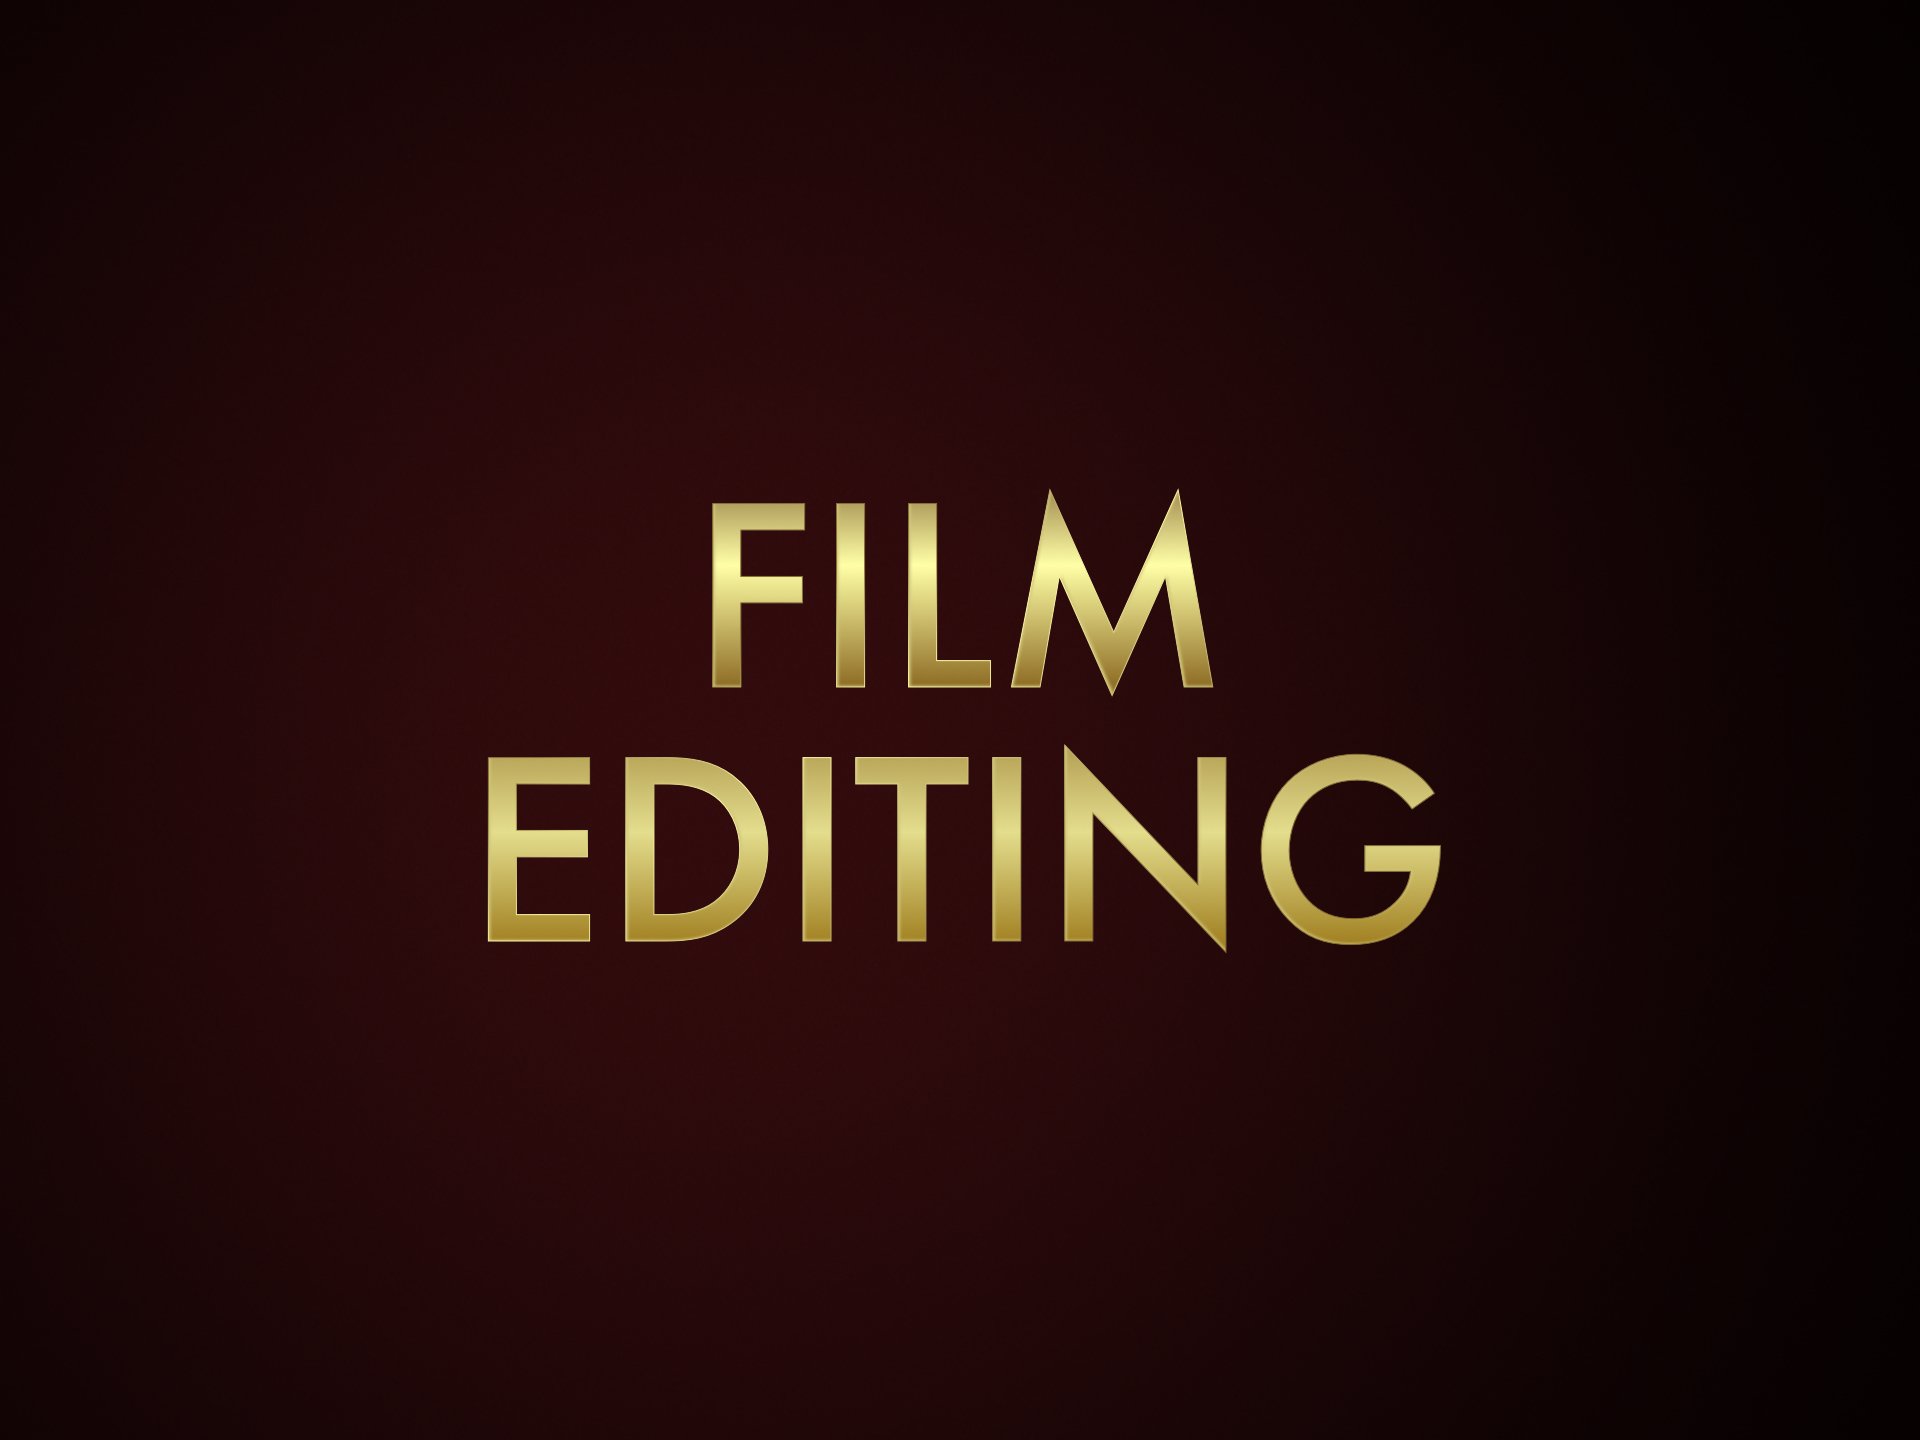 Film Editing Oscar Nominations Oscars News 92nd